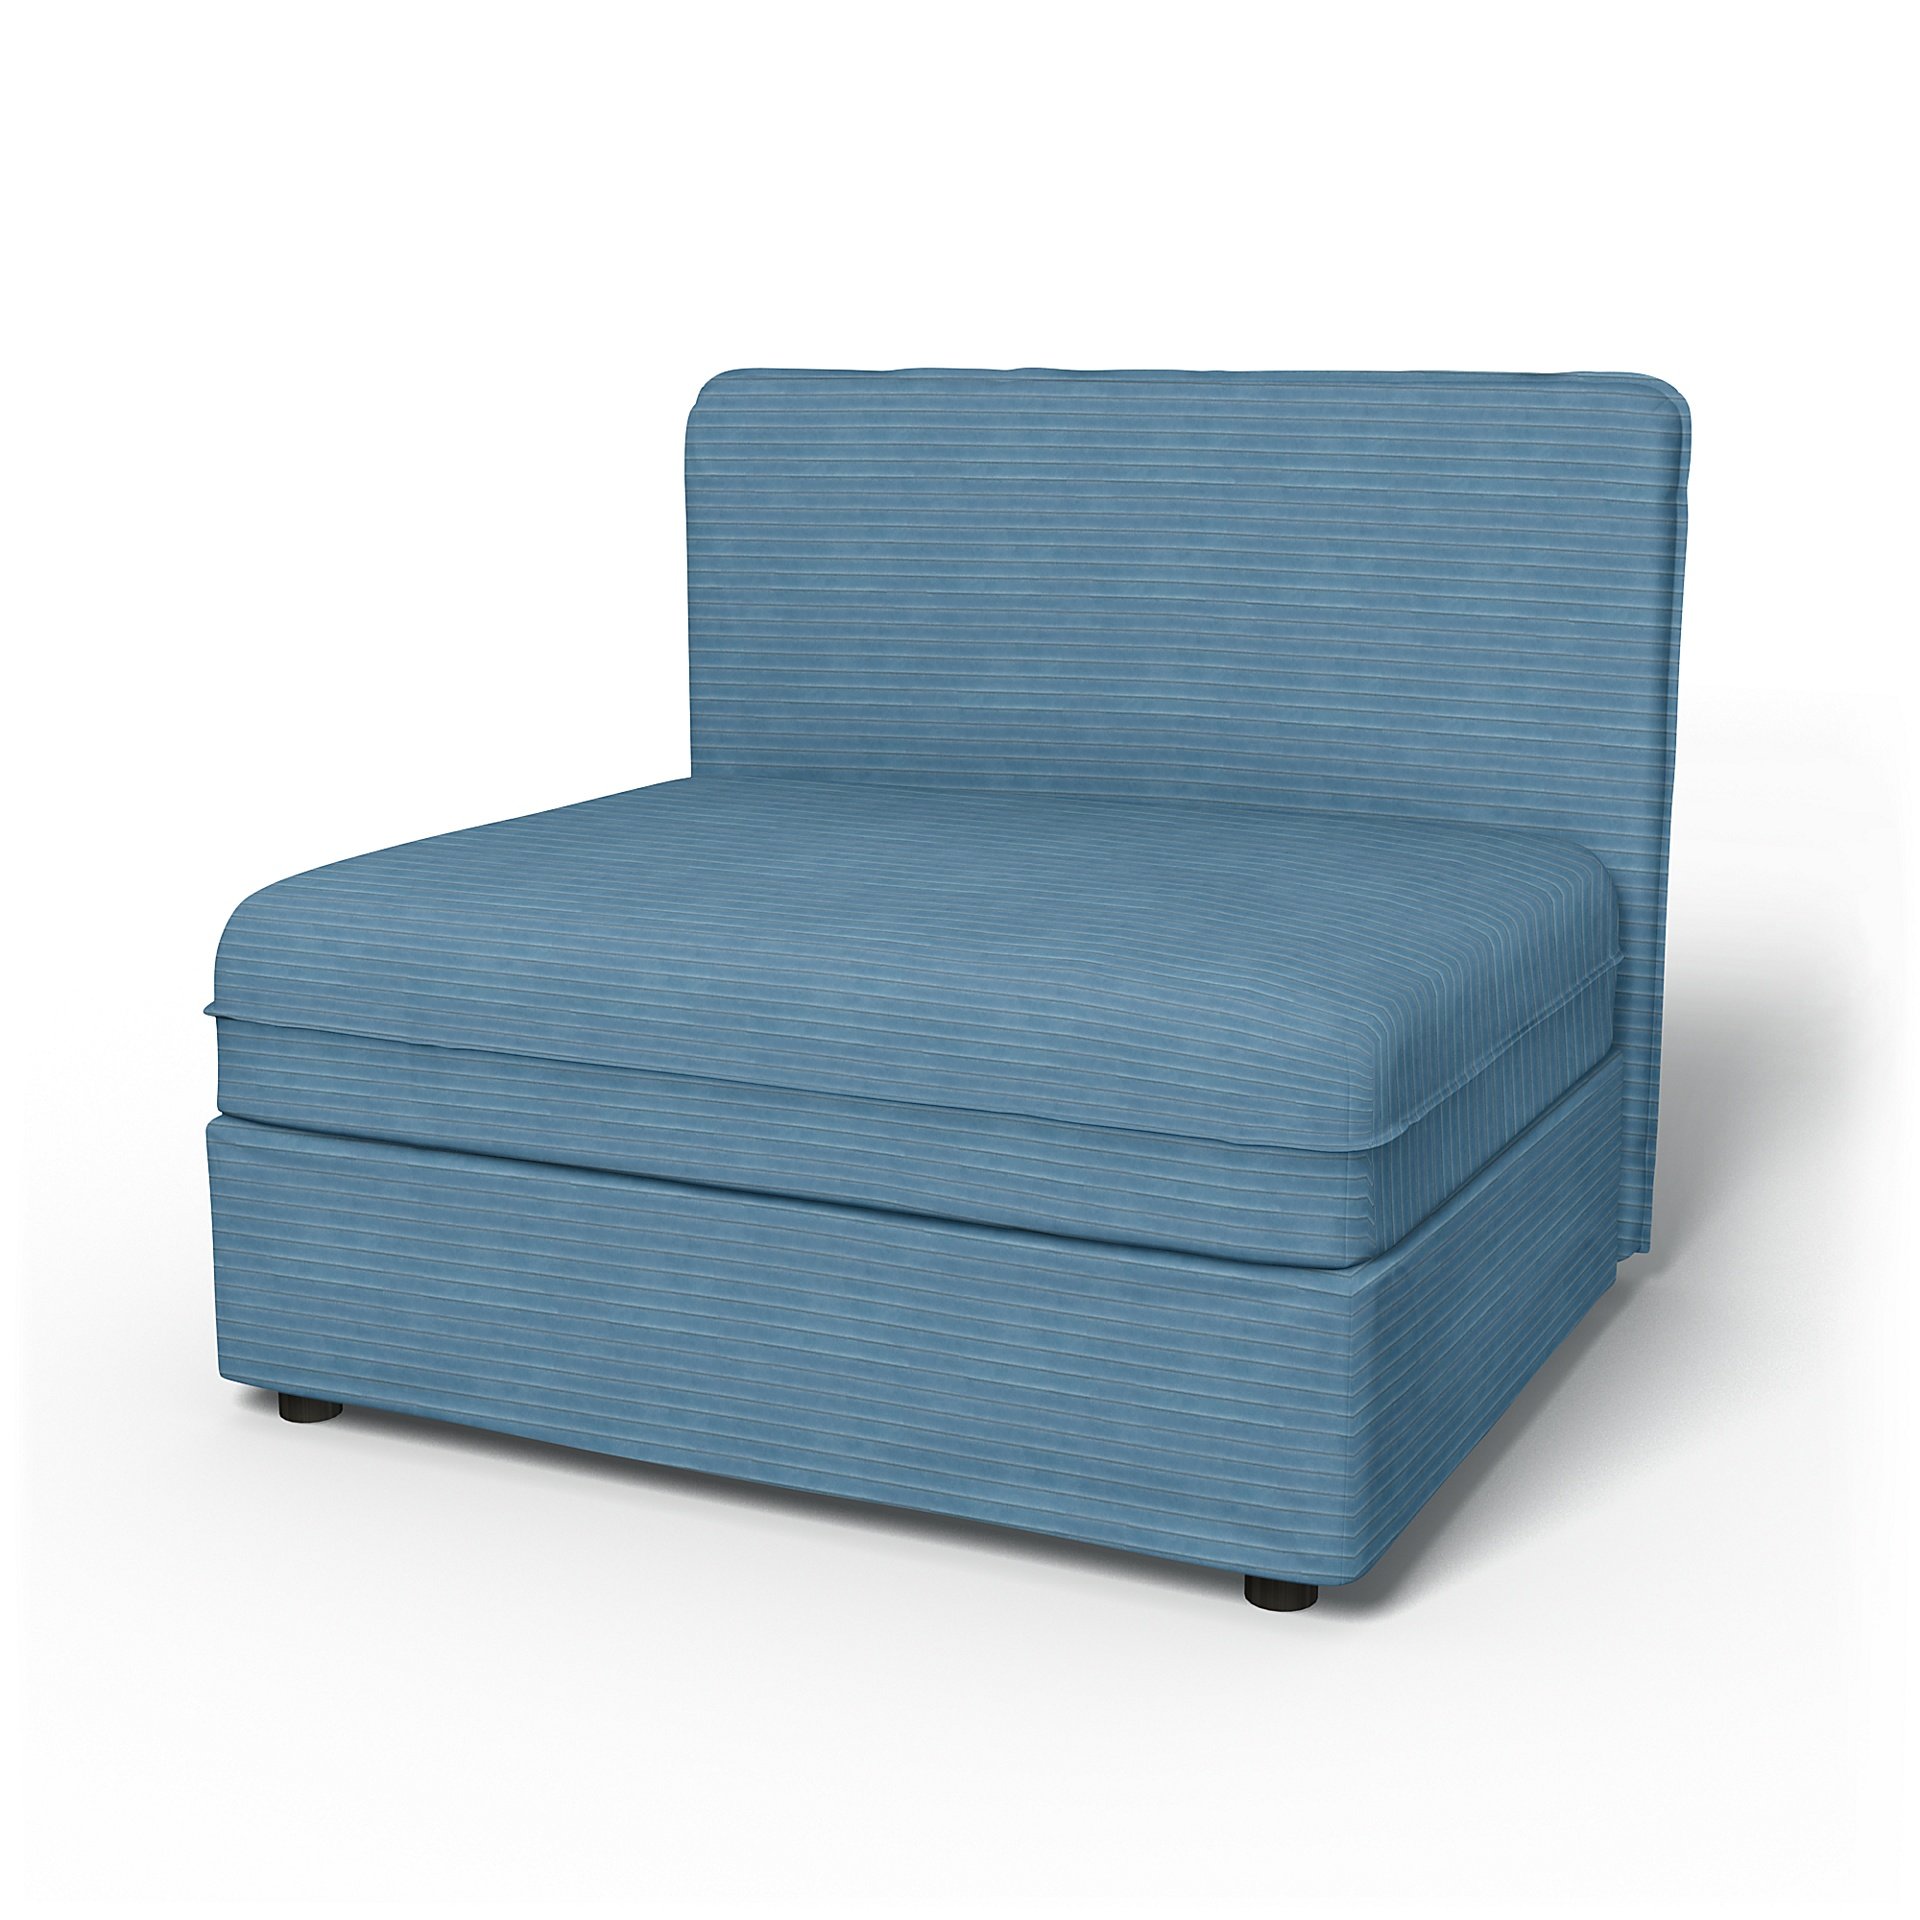 IKEA - Vallentuna Seat Module with Low Back Cover 100x80cm 39x32in, Sky Blue, Corduroy - Bemz